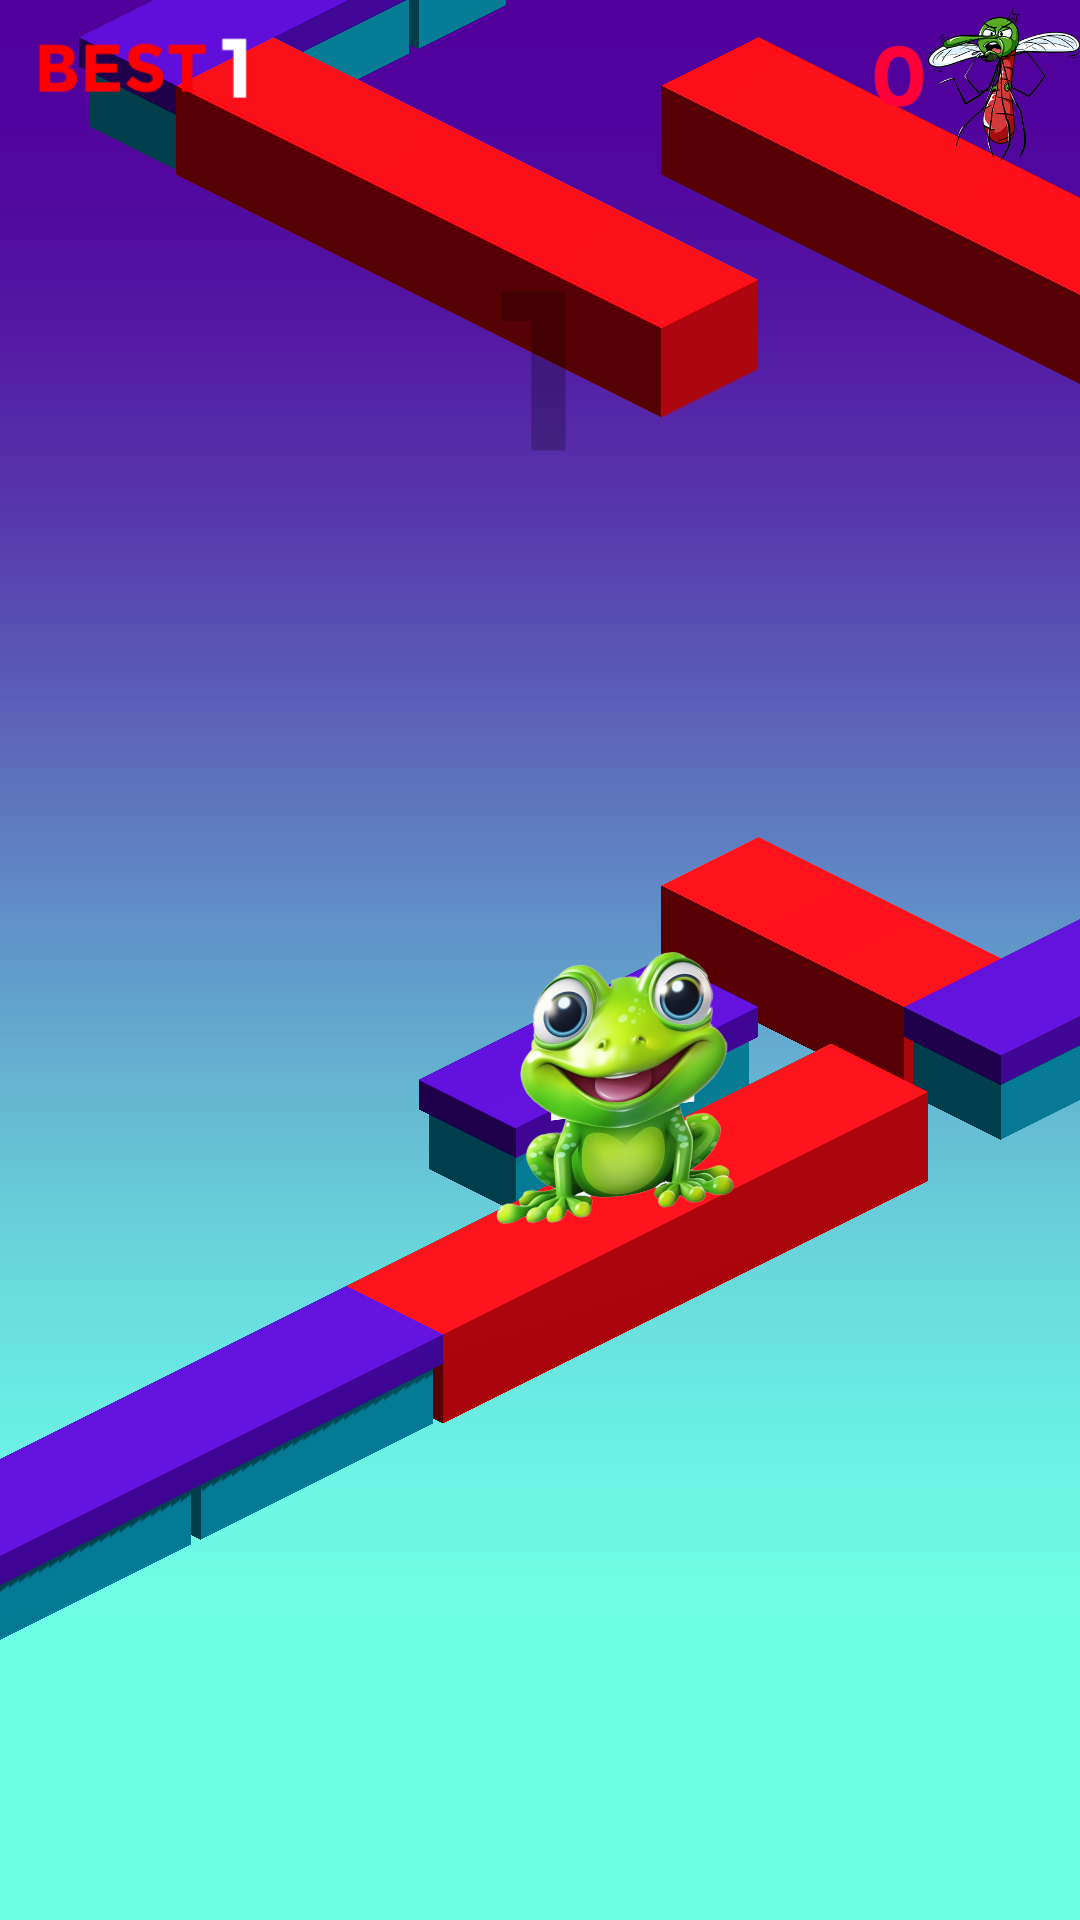 Frog Hustles遊戲截圖